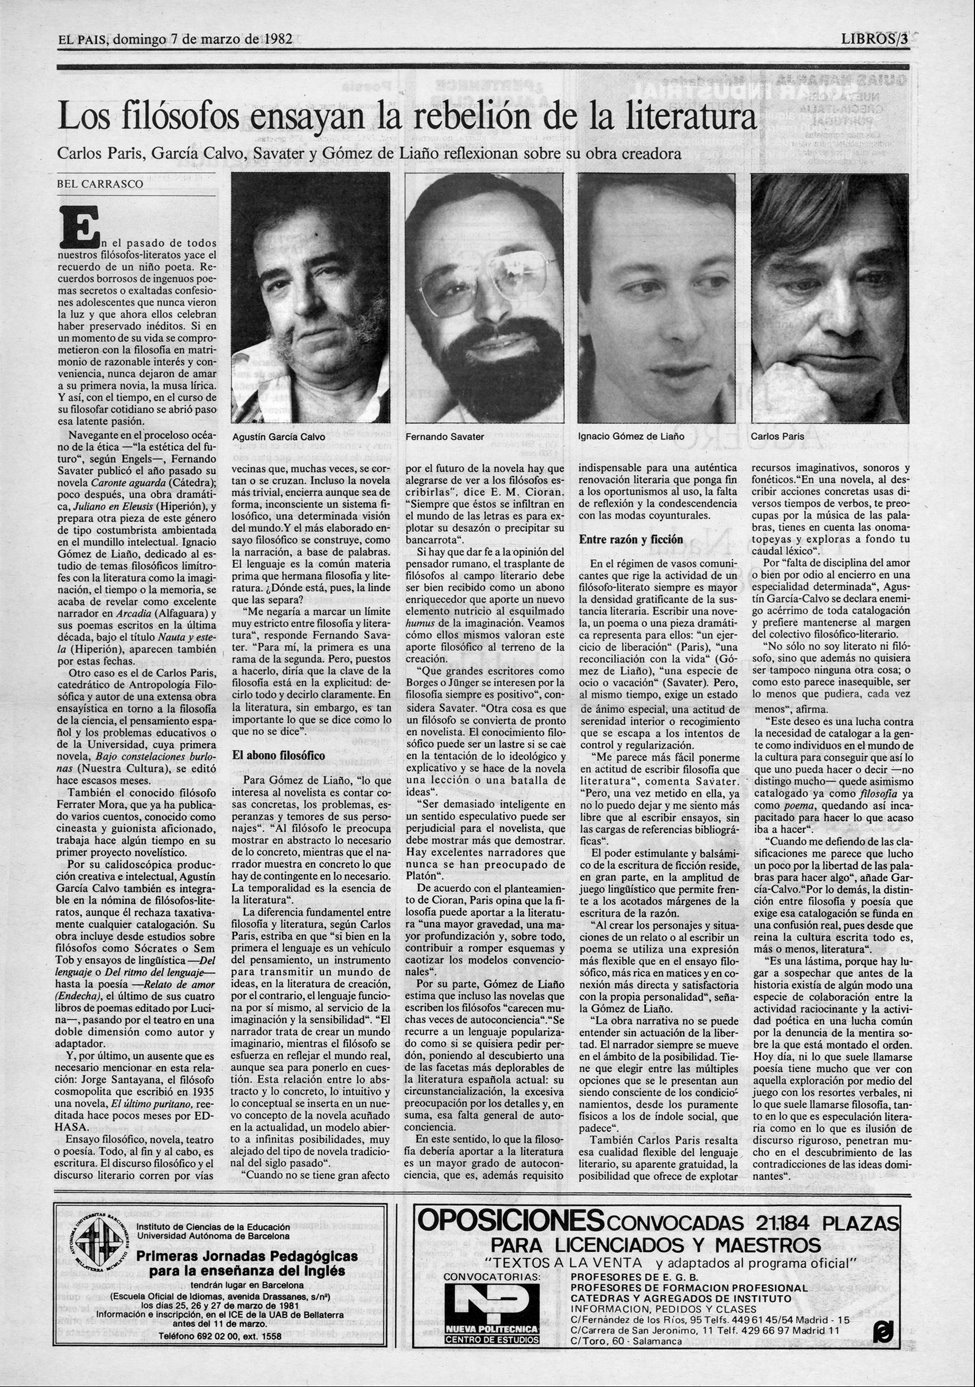 [Agustín+García+Calvo+El+País+7+marzo+1982.jpg]